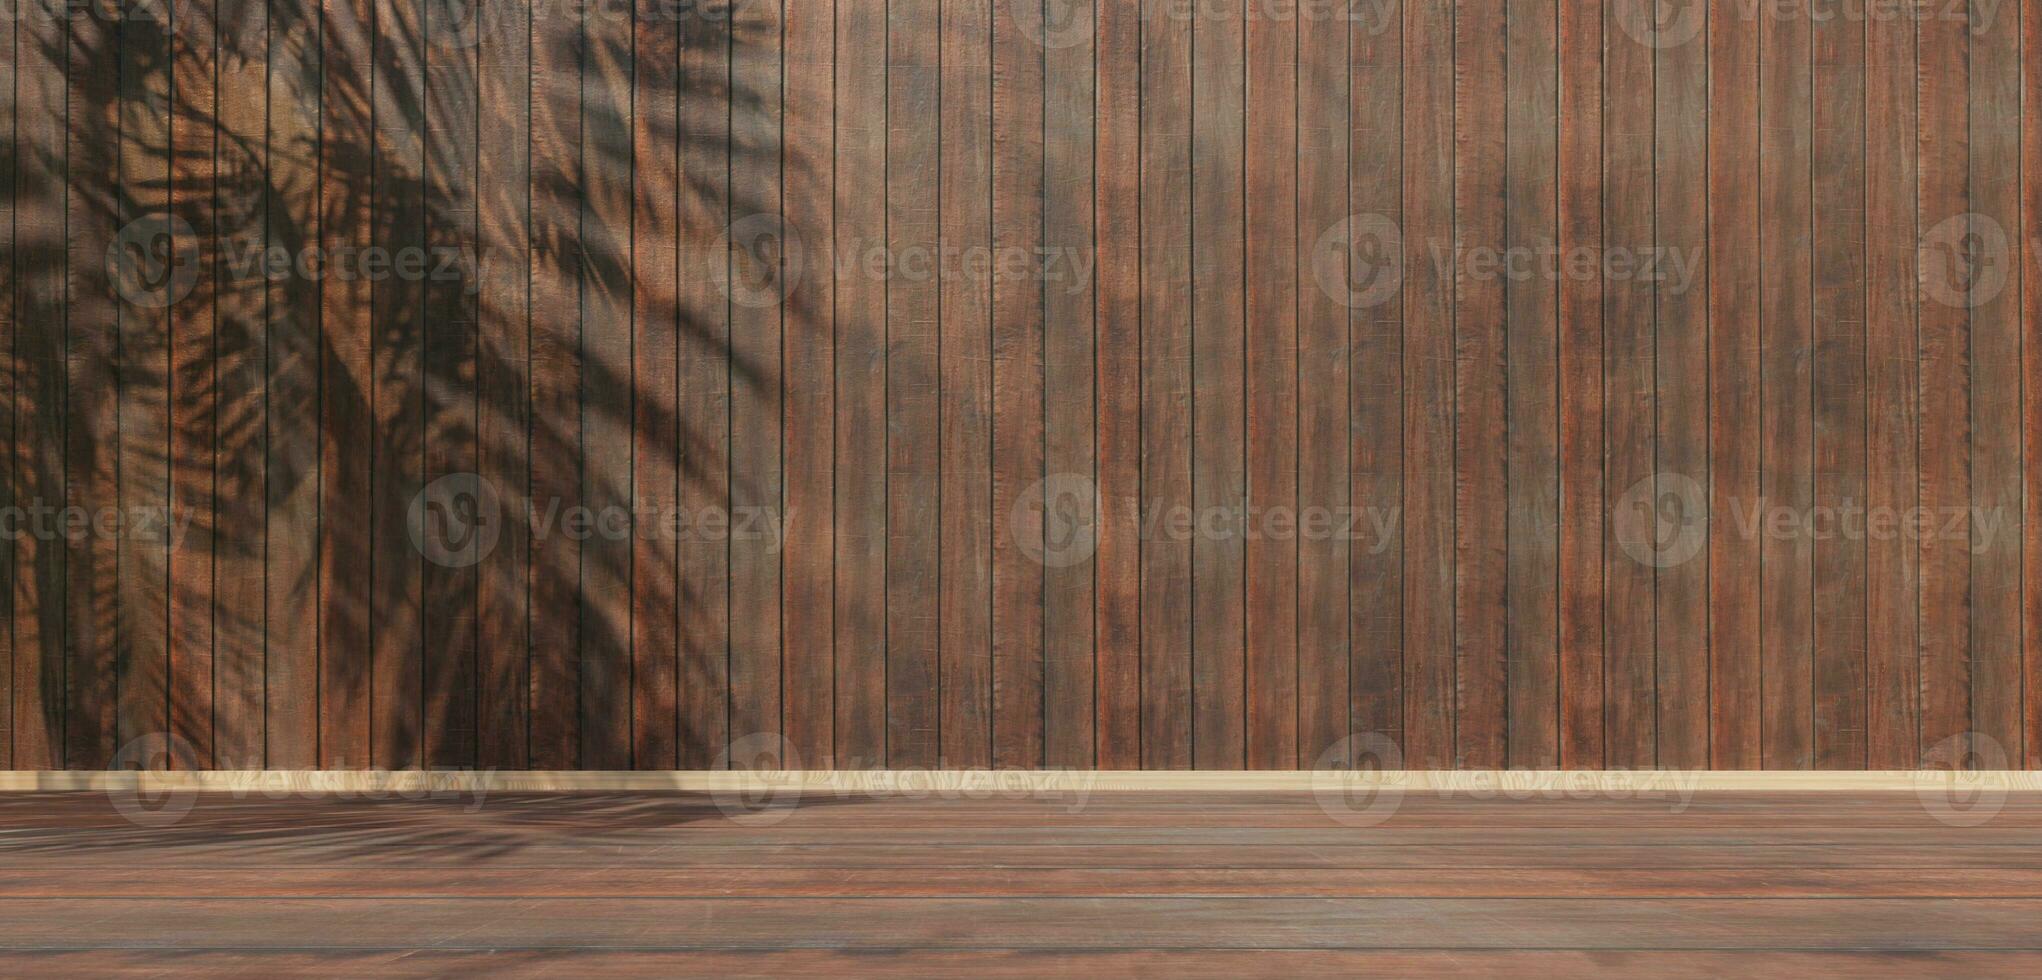 Hintergrund Holz Szene Holz Korn Holz Fußboden Holz Mauer Grunge 3d Illustration foto